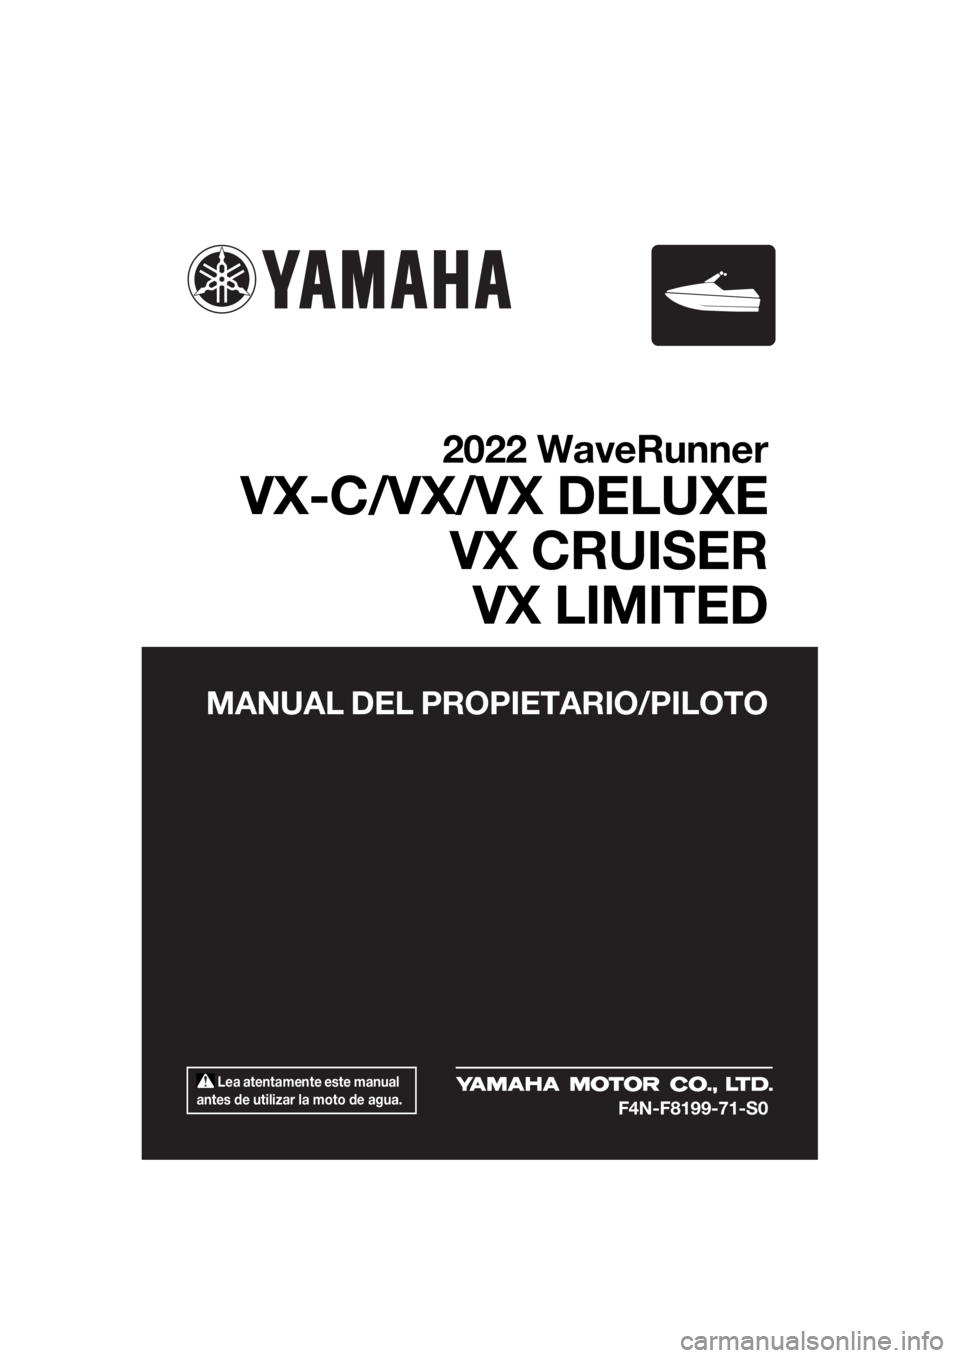 YAMAHA VX-C 2022  Manuale de Empleo (in Spanish)  Lea atentamente este manual 
antes de utilizar la moto de agua.
MANUAL DEL PROPIETARIO/PILOTO
2022 WaveRunner
VX-C/VX/VX DELUXE VX CRUISERVX LIMITED
F4N-F8199-71-S0
UF4N71S0.book  Page 1  Thursday, A